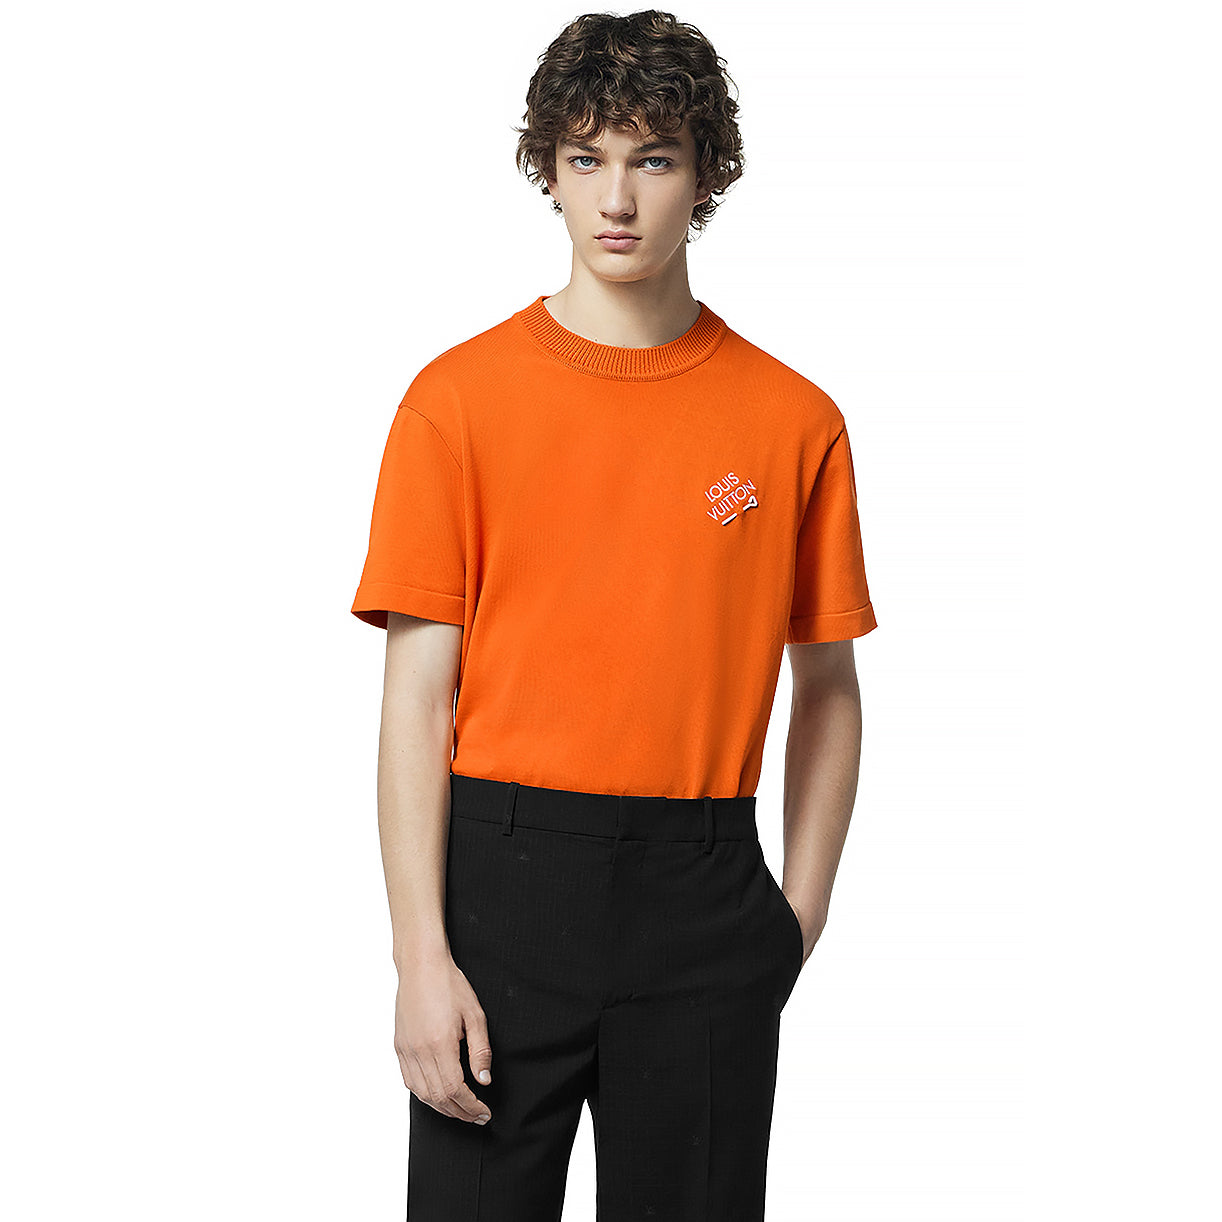 louis vuitton orange t shirt